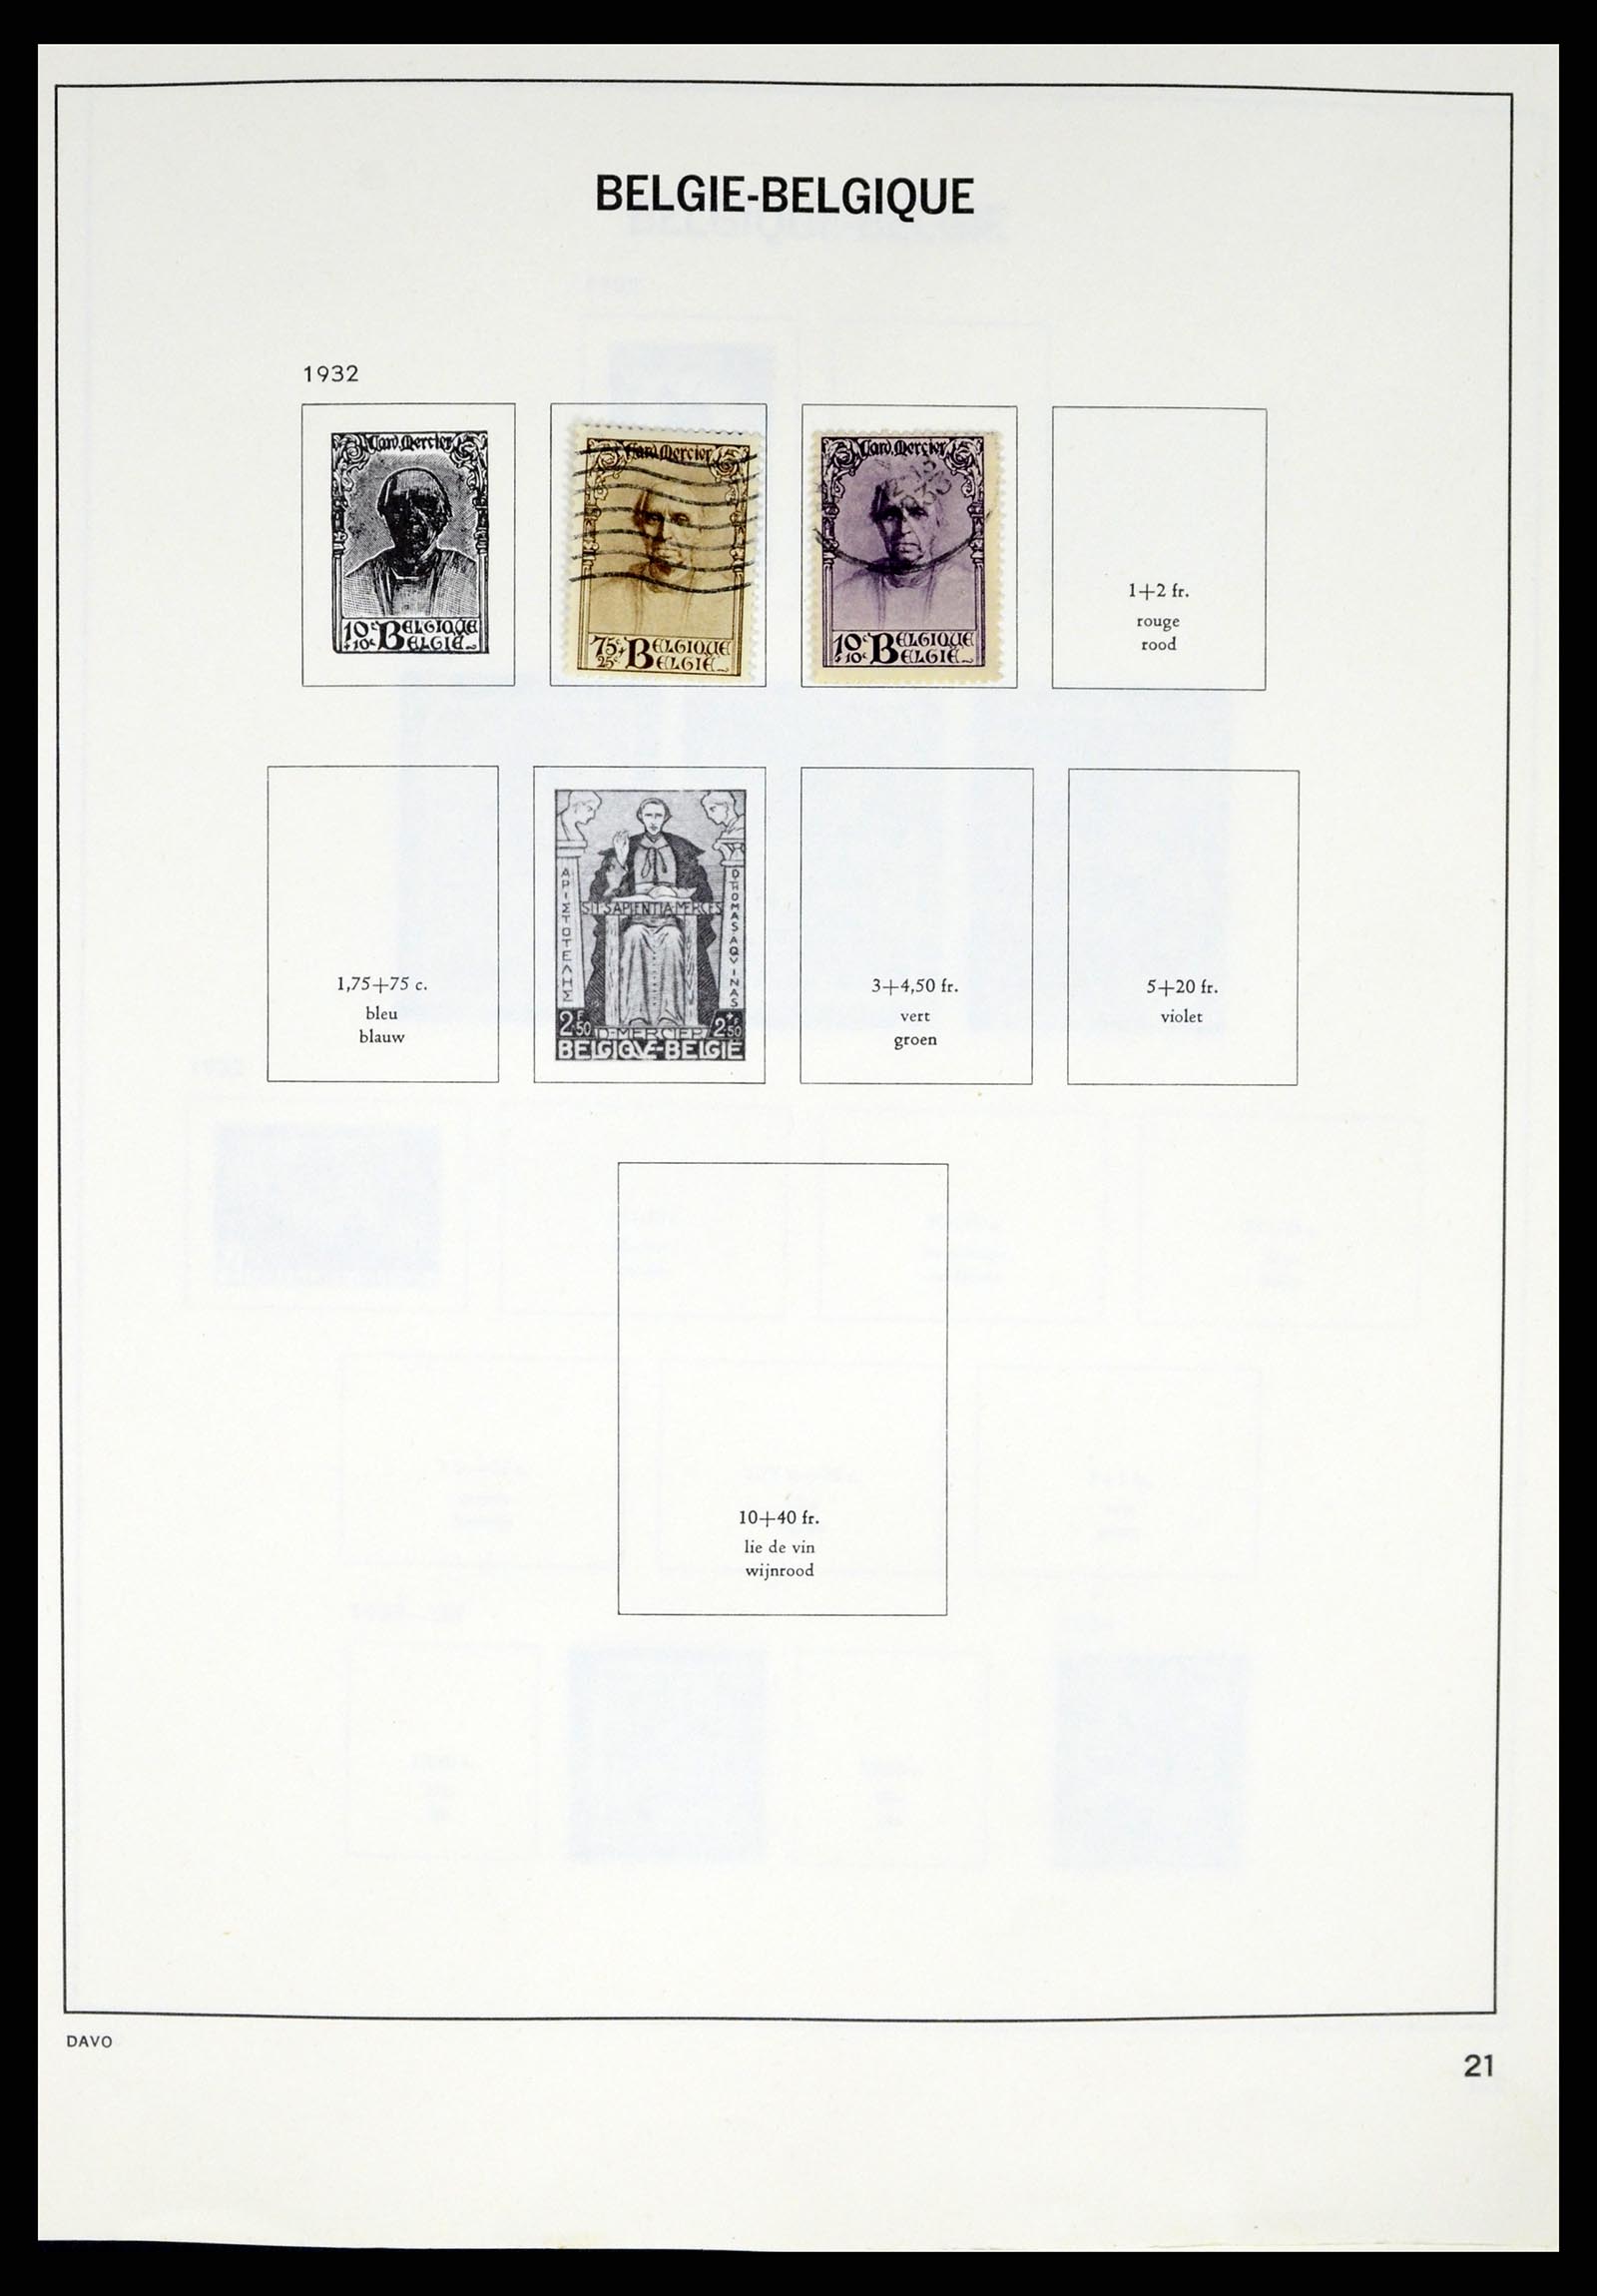 37367 020 - Stamp collection 37367 Belgium 1849-2003.